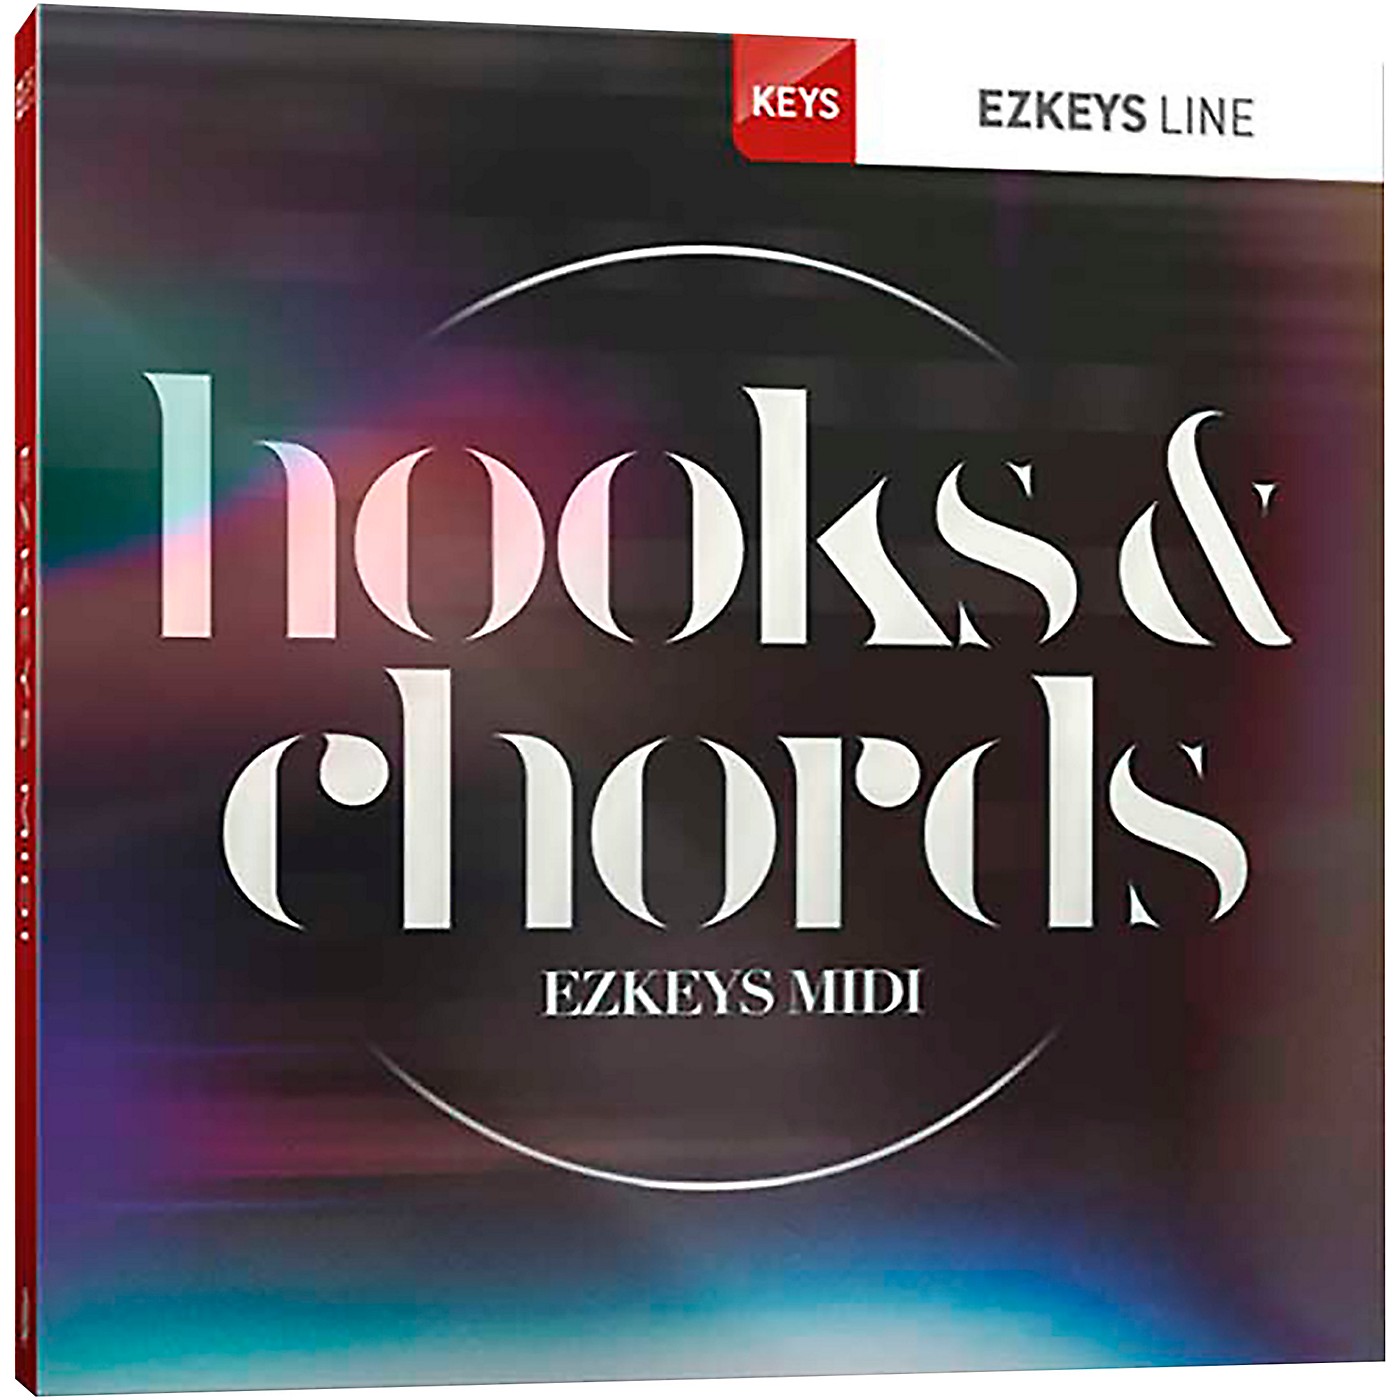 Toontrack Hooks & Chords EZKeys MIDI (Download) thumbnail